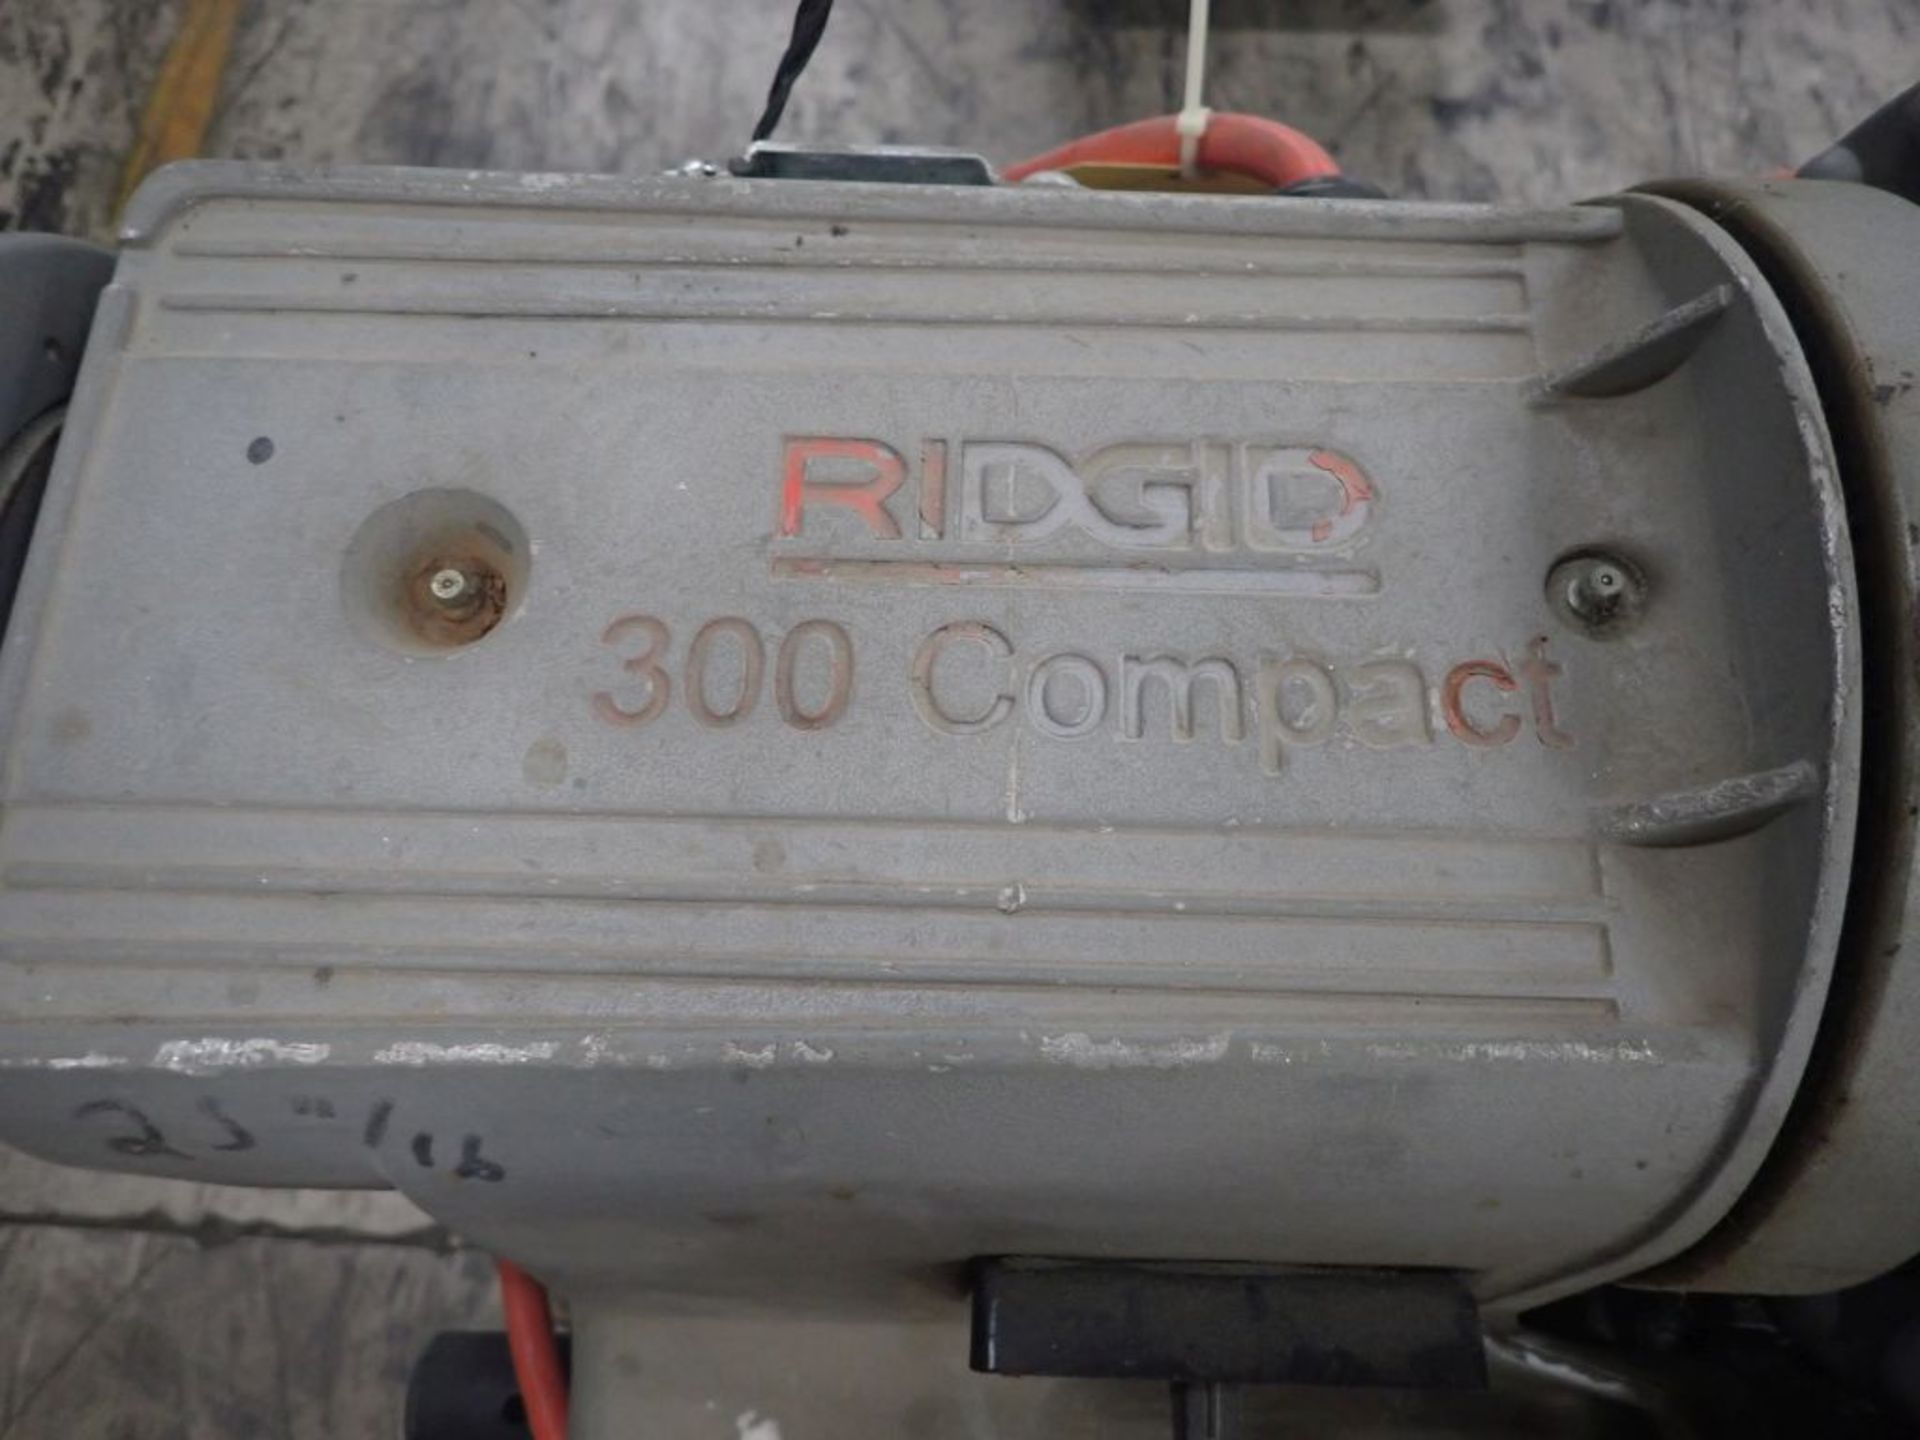 Rigid Threading Machine On Portable Cart - Image 11 of 11